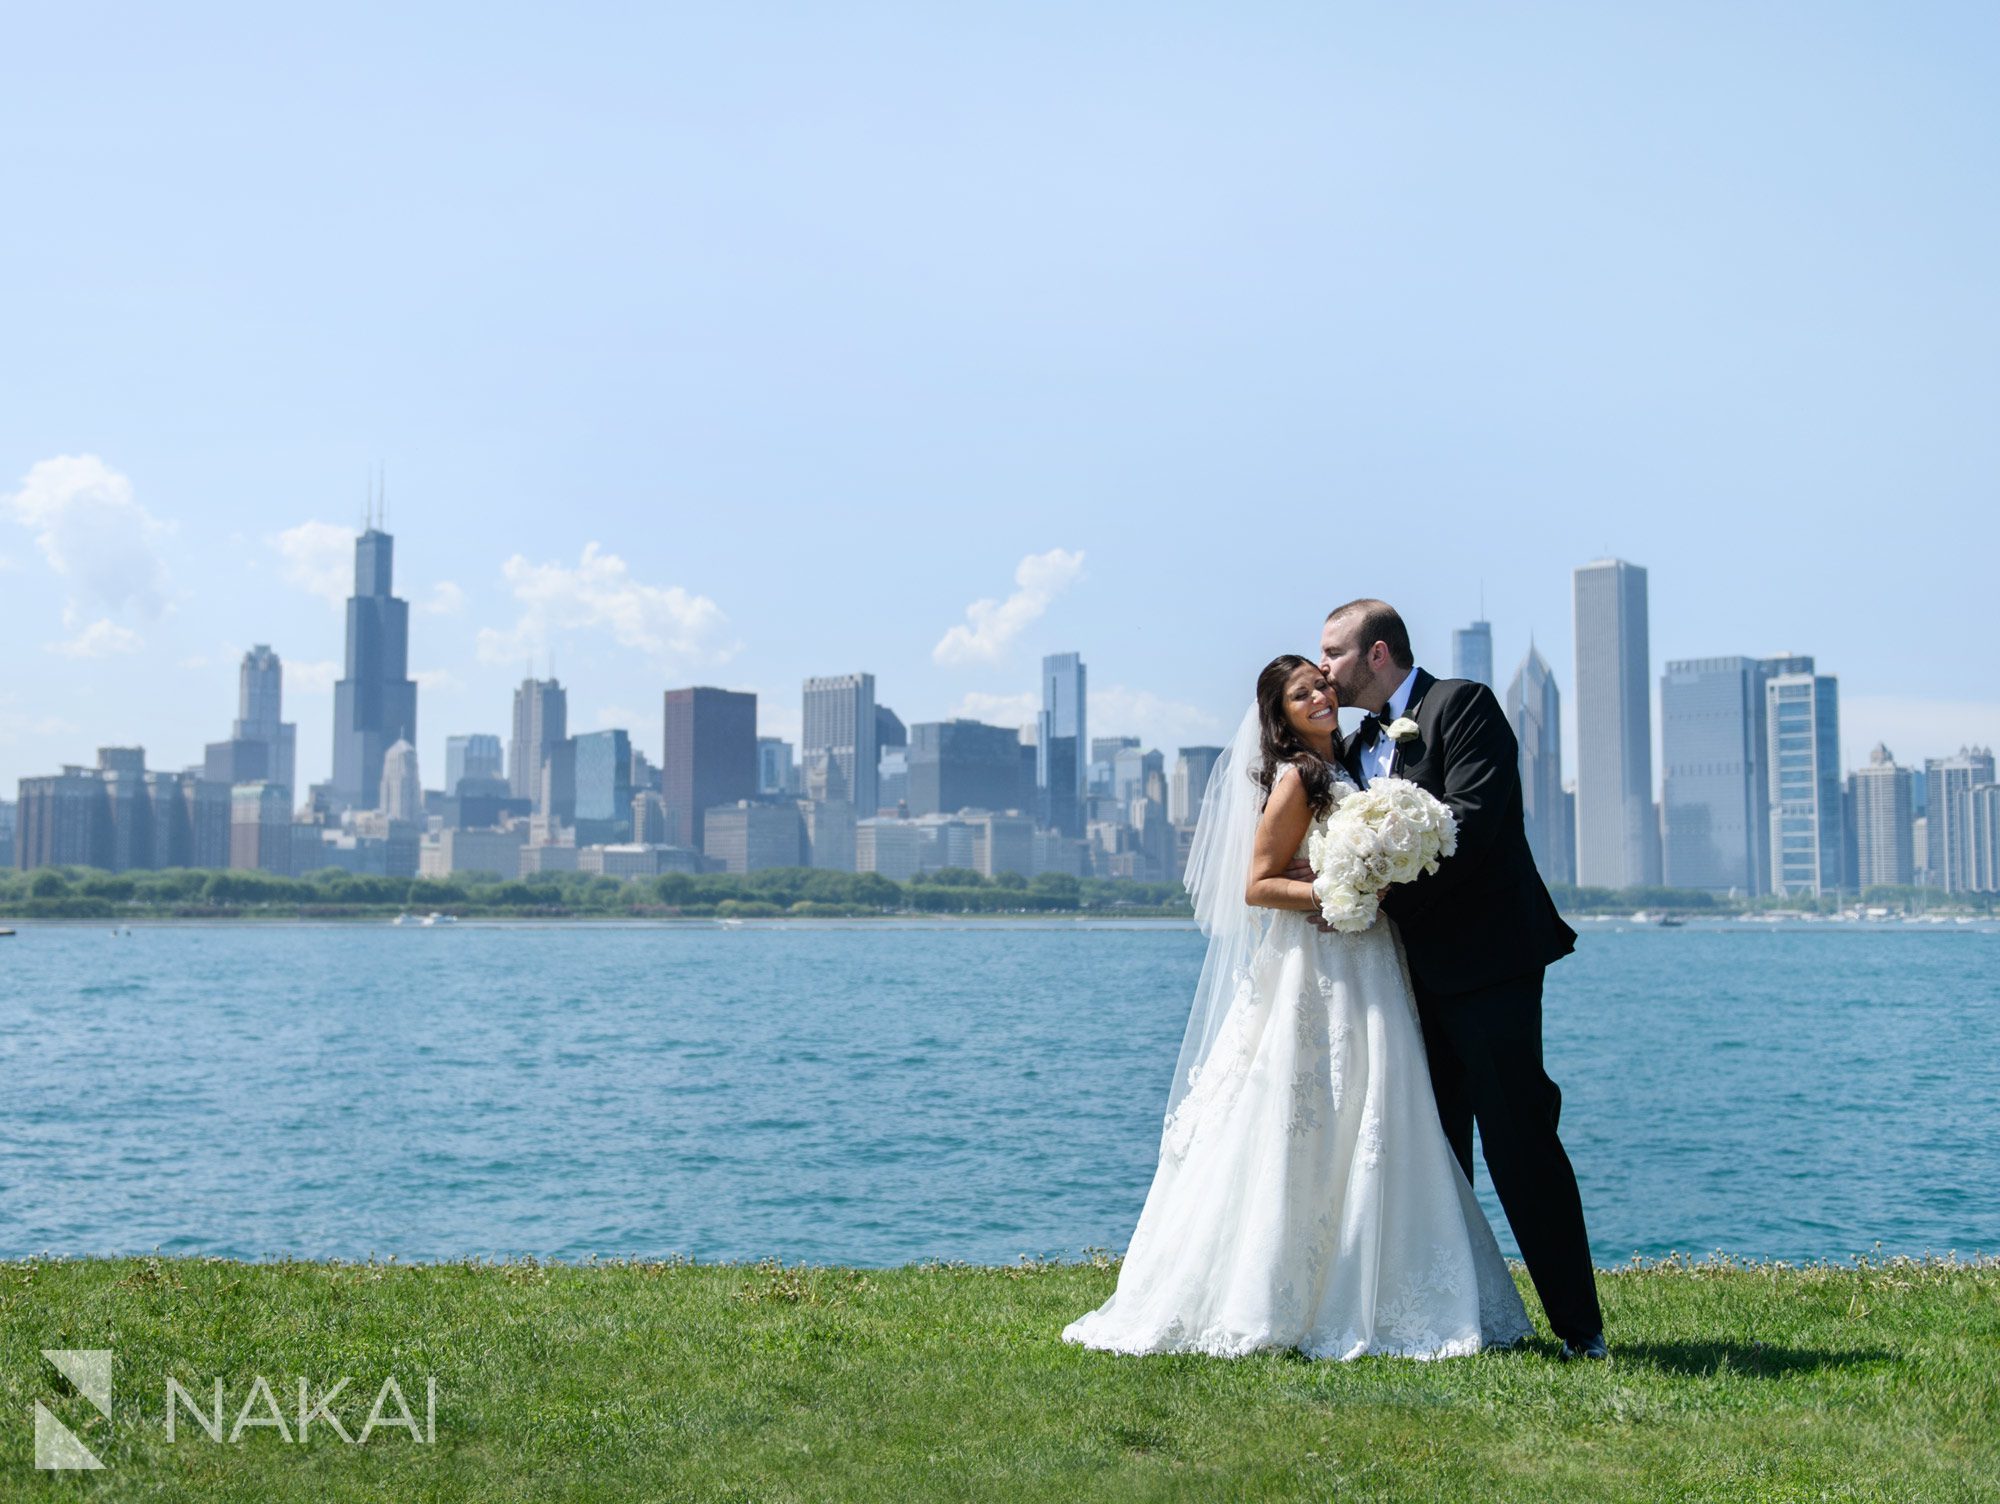 chicago wedding photo locations Adler planetarium skyline